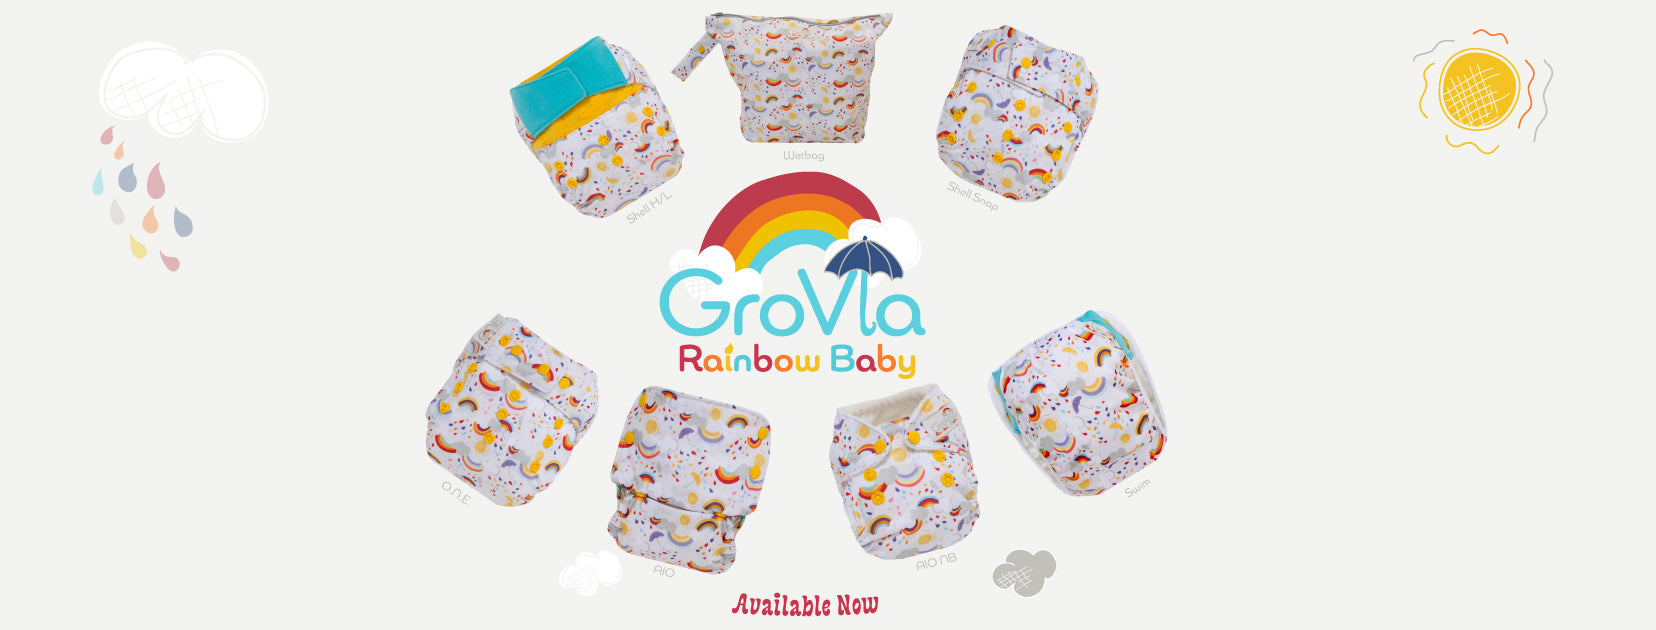 GroVia - Rainbow Baby Limited Edition Print